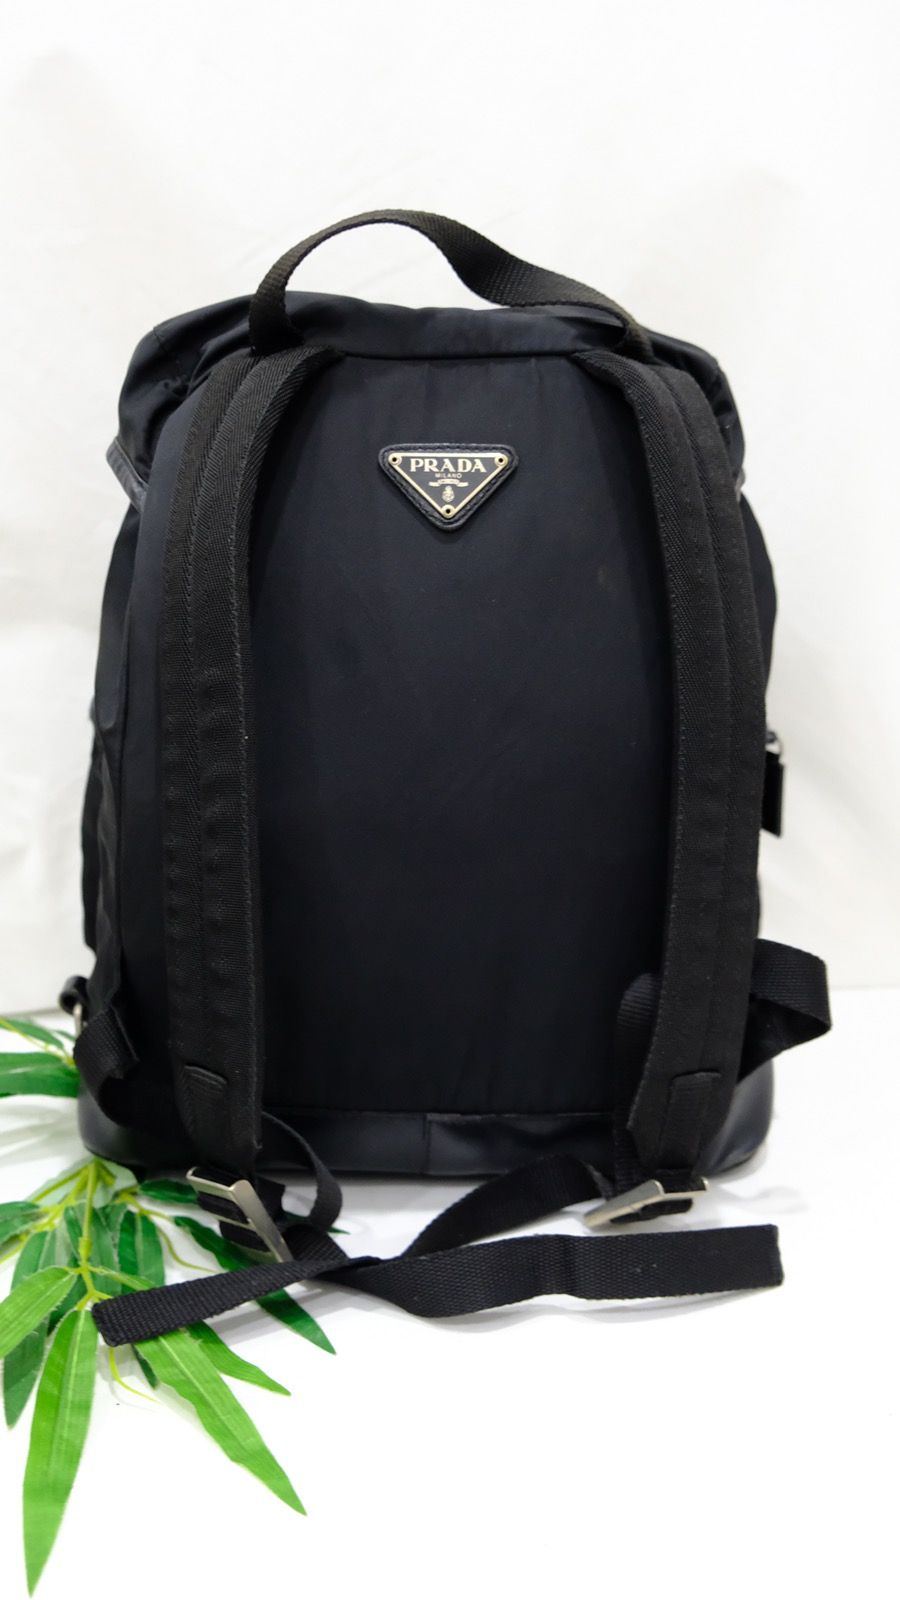 Authentic prada backpack Black Nylon Double pocket - 5